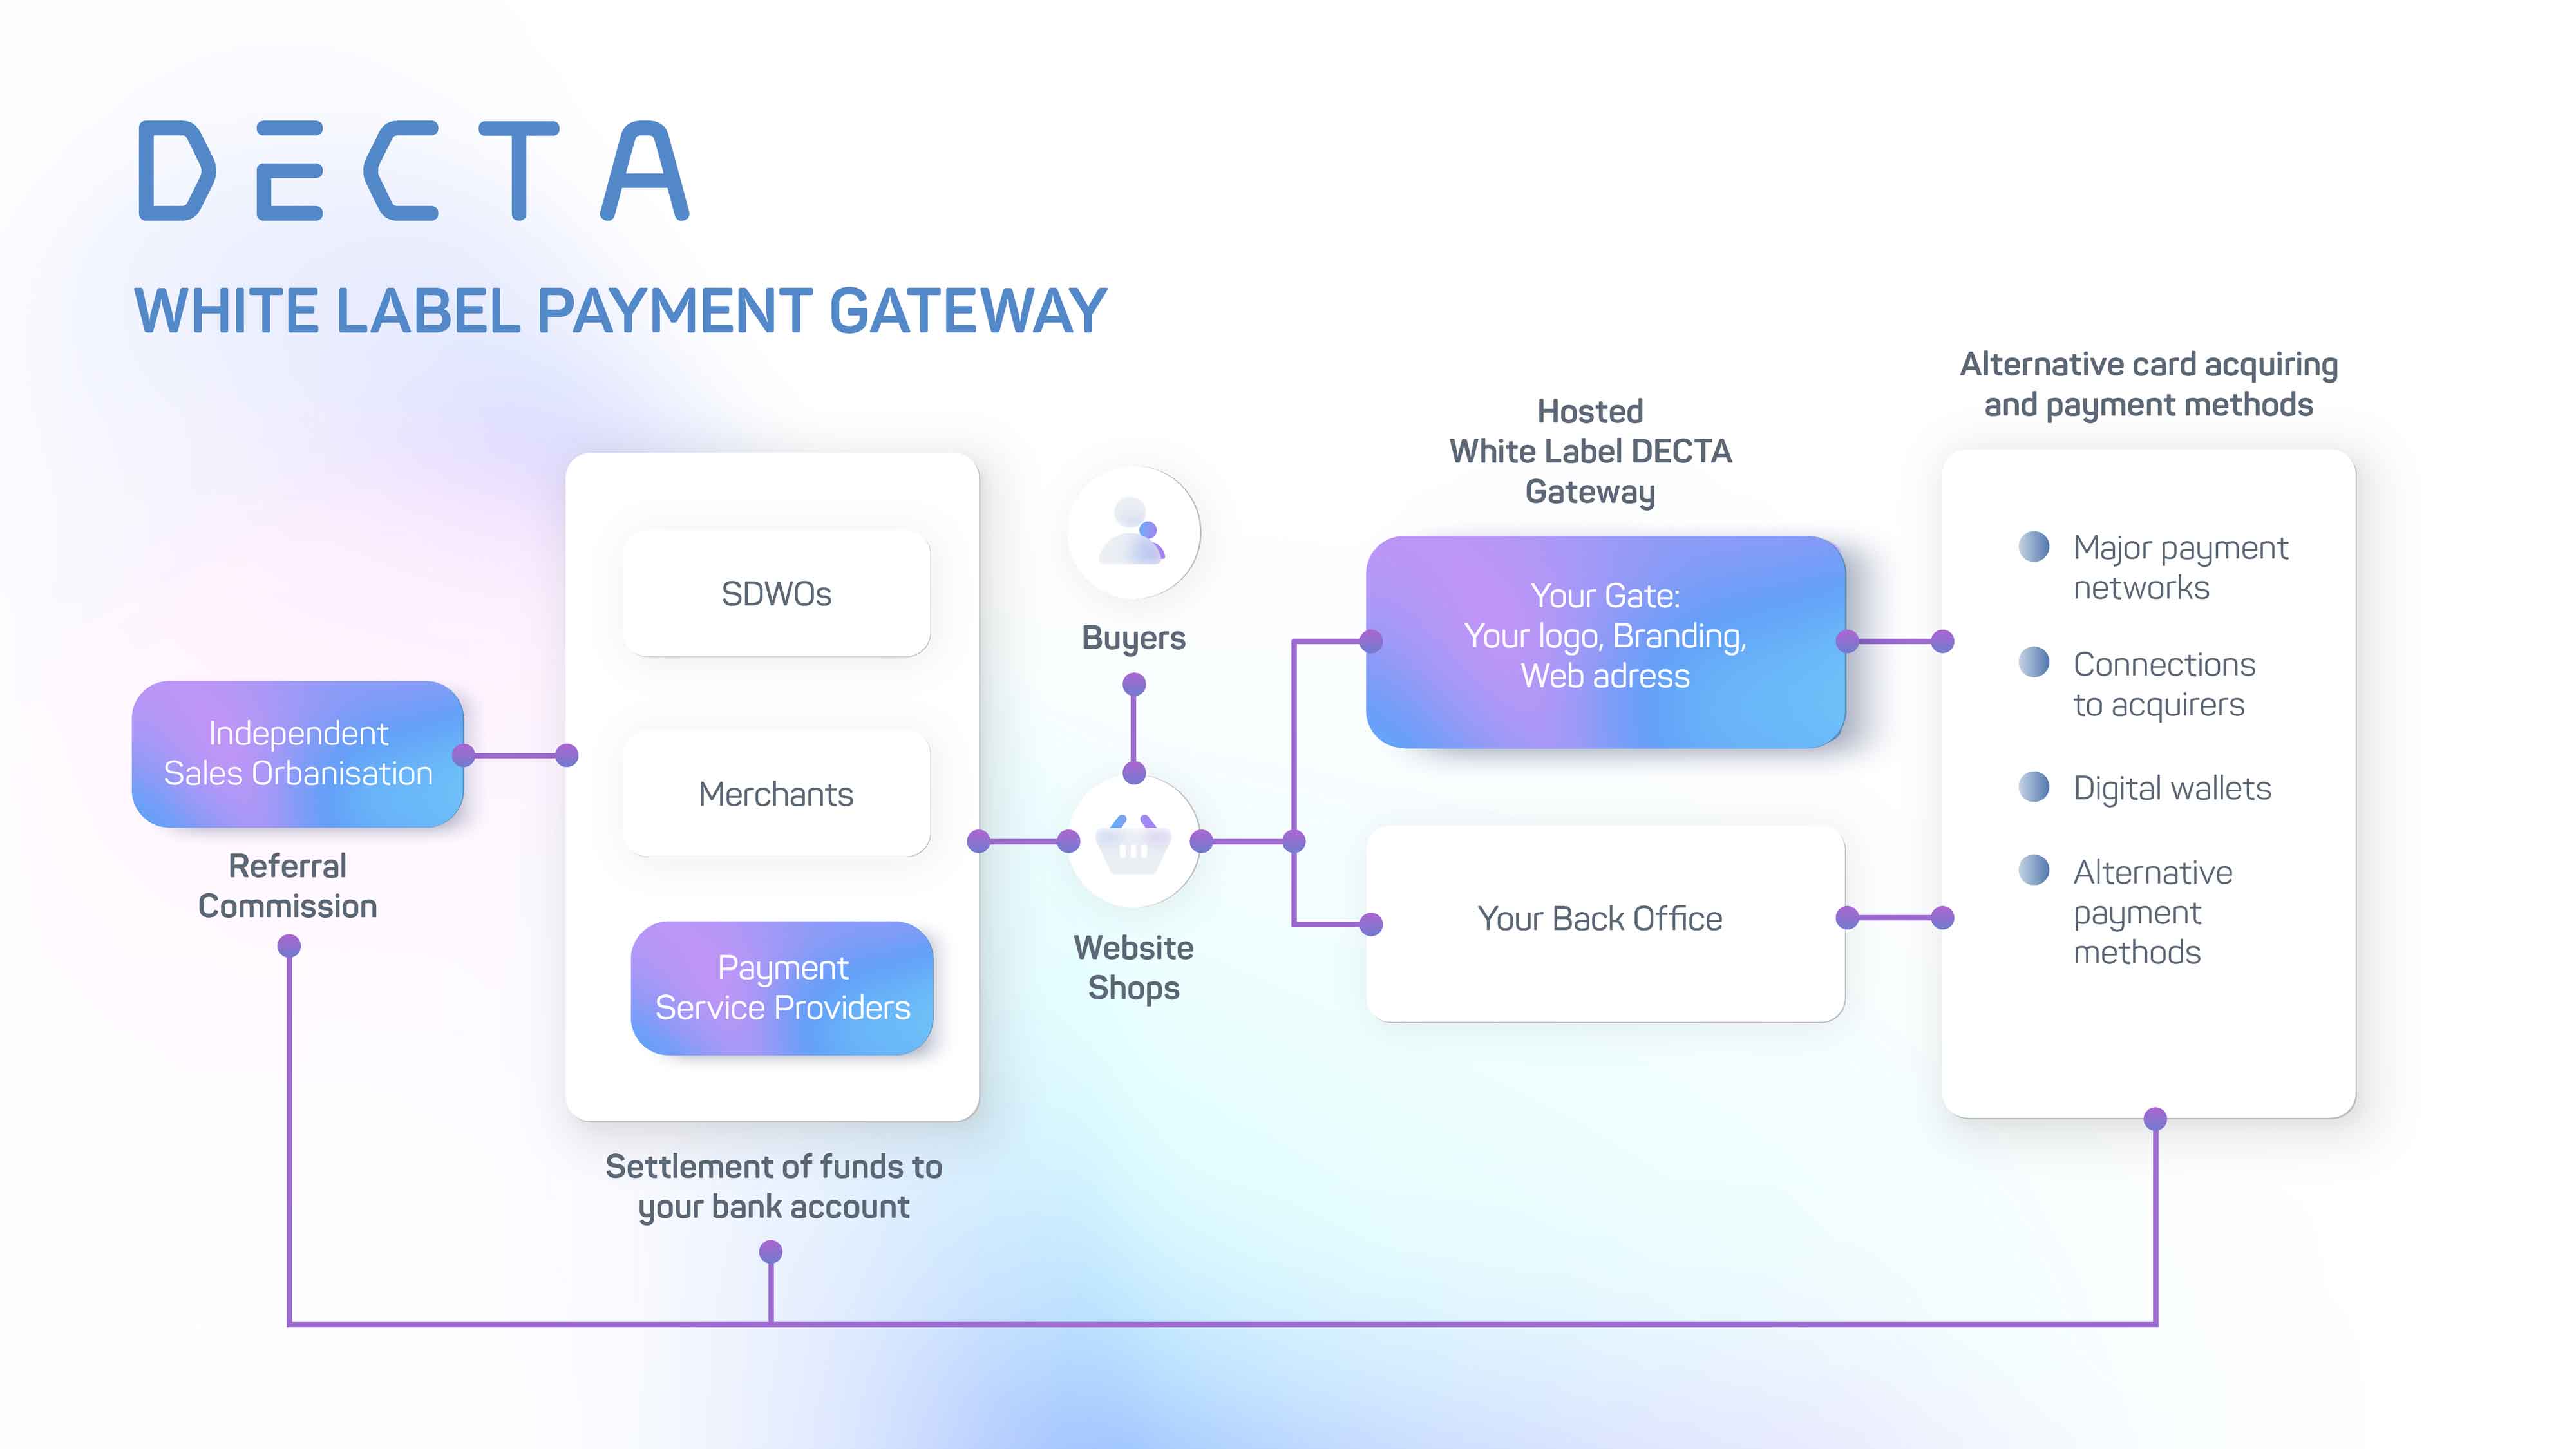 DECTA-white lavel payment gateway